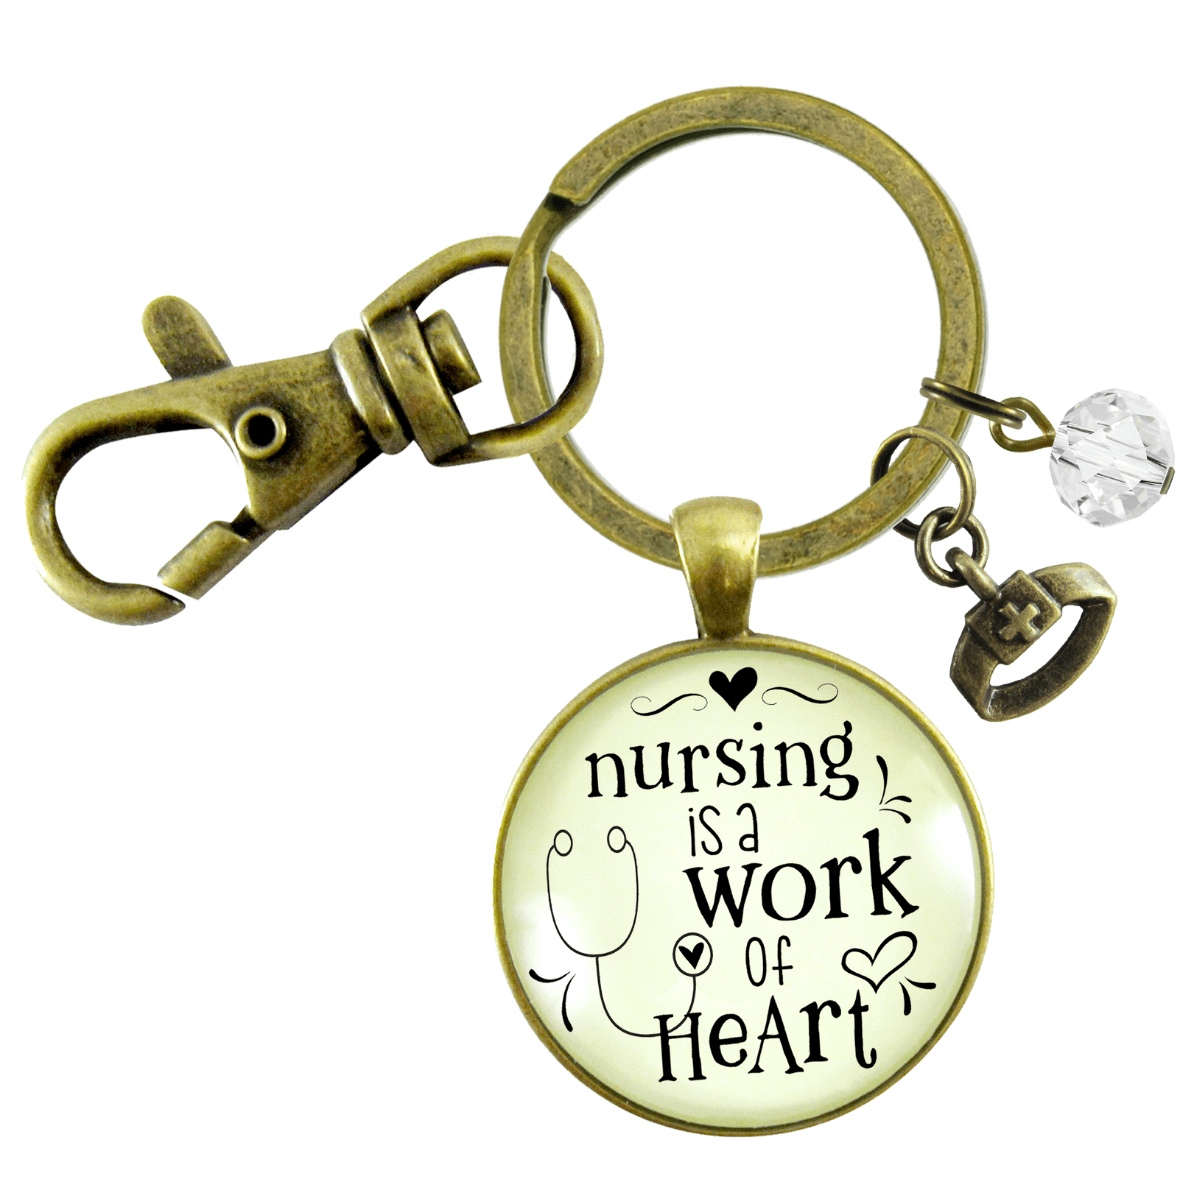 Nurse Keychain Nursing Work Heart Thank You Gift Medical Jewelry - Gutsy Goodness